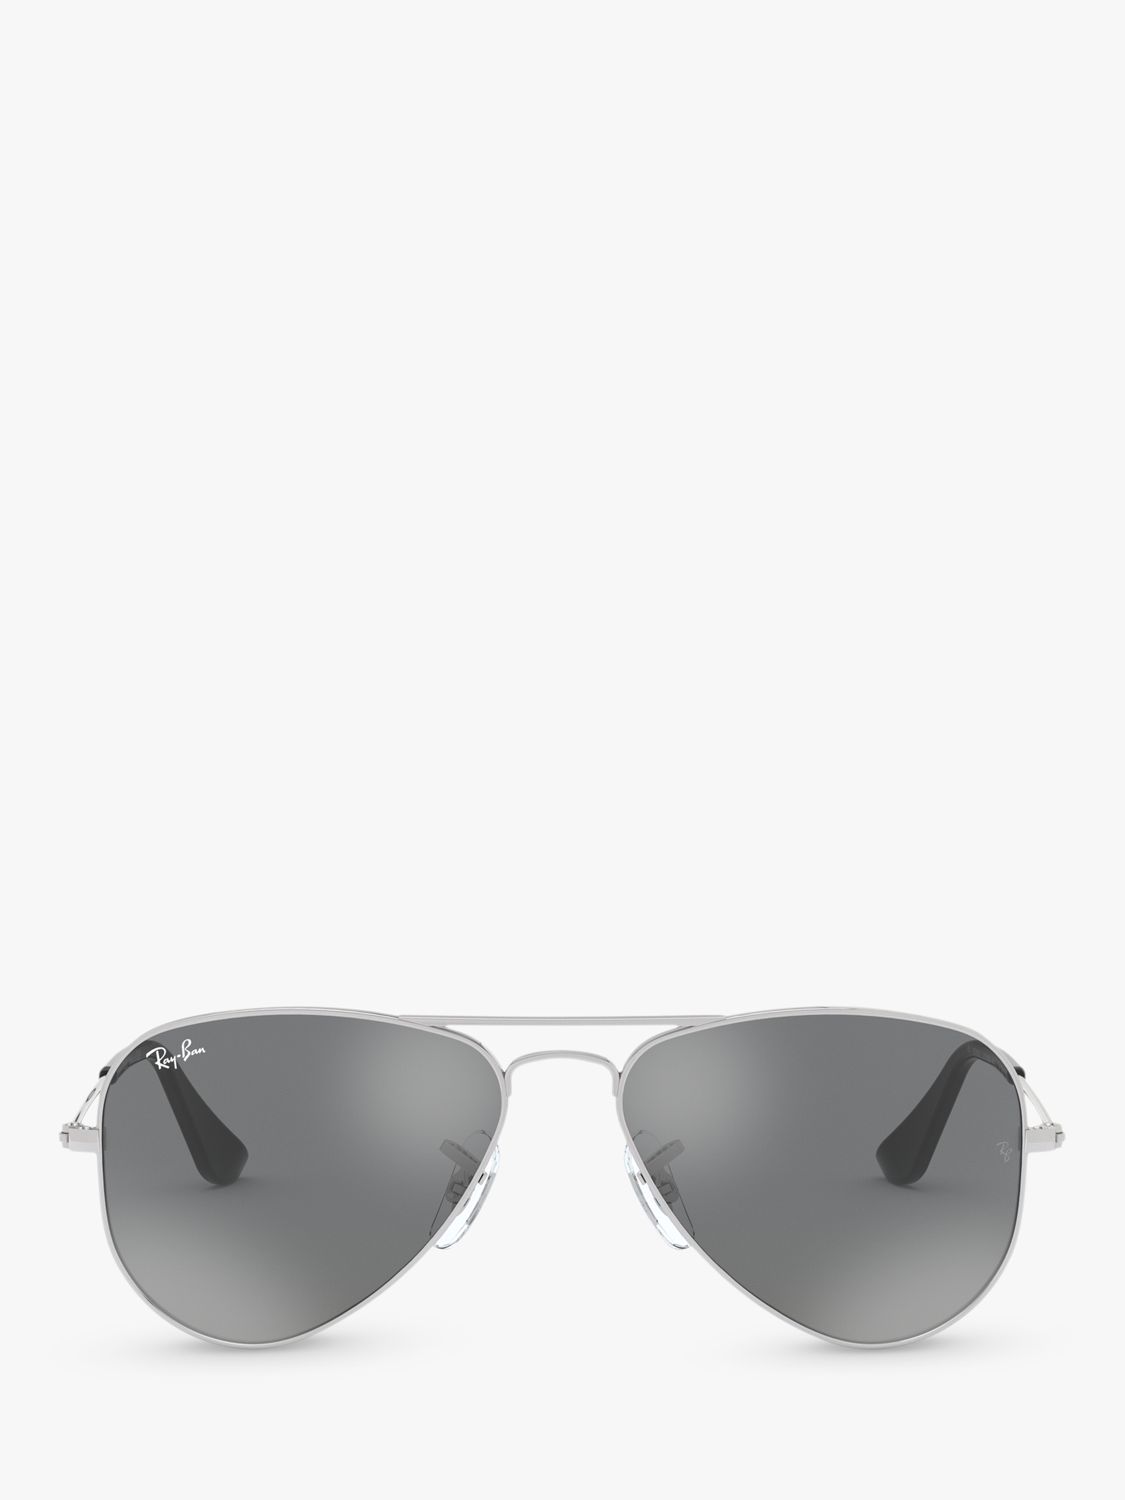 Buy Ray-Ban Junior RJ9506S Pilot Sunglasses Online at johnlewis.com